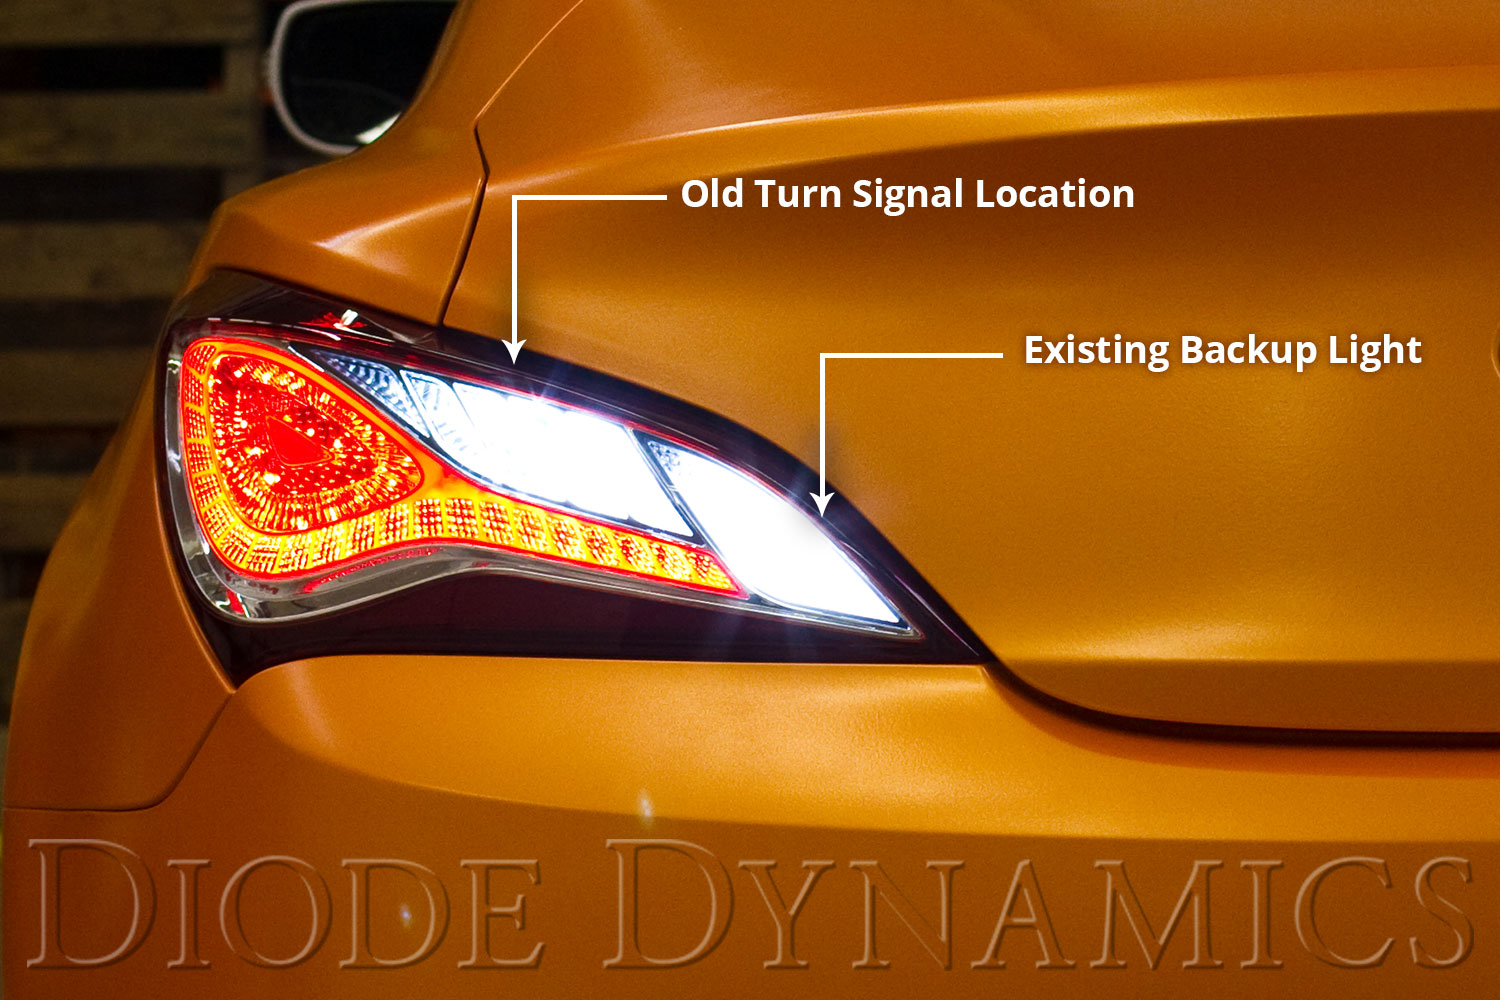 Genesis Coupe Tail as Turn +Backup Module 13-16 Hyundai Genesis Coupe Diode Dynamics-dd3015